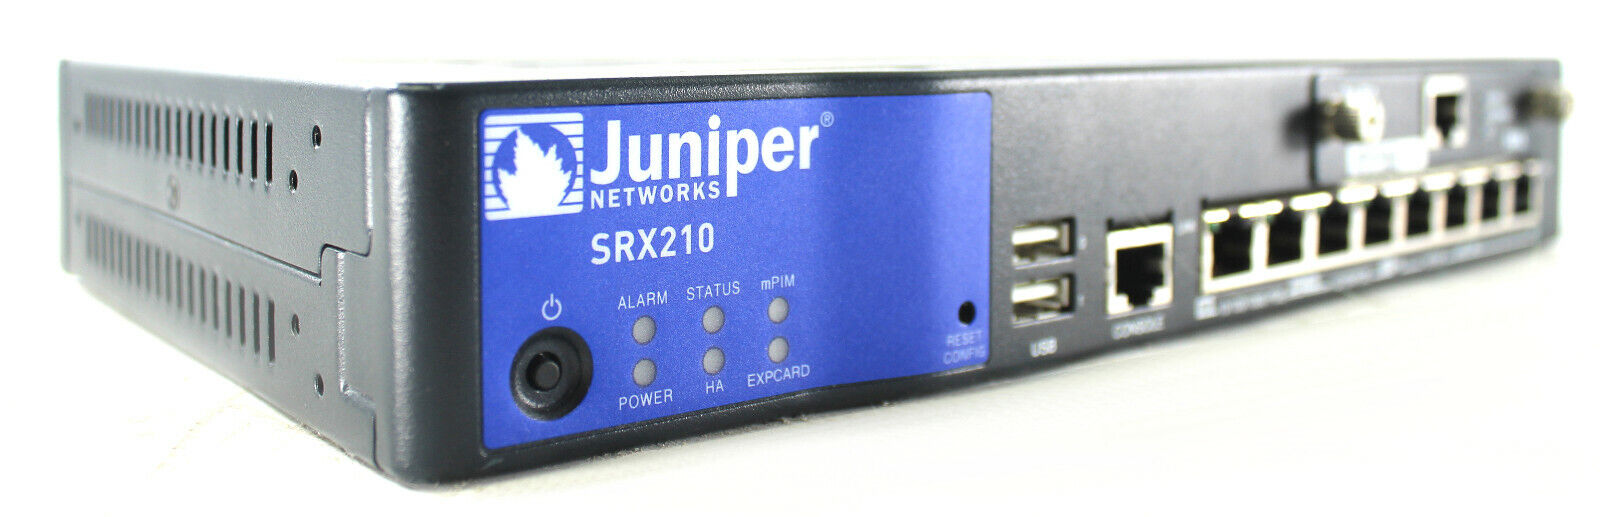 Juniper SRX210 SRX210HE-POE Gateway with T1/E1 card - No AC Adapter